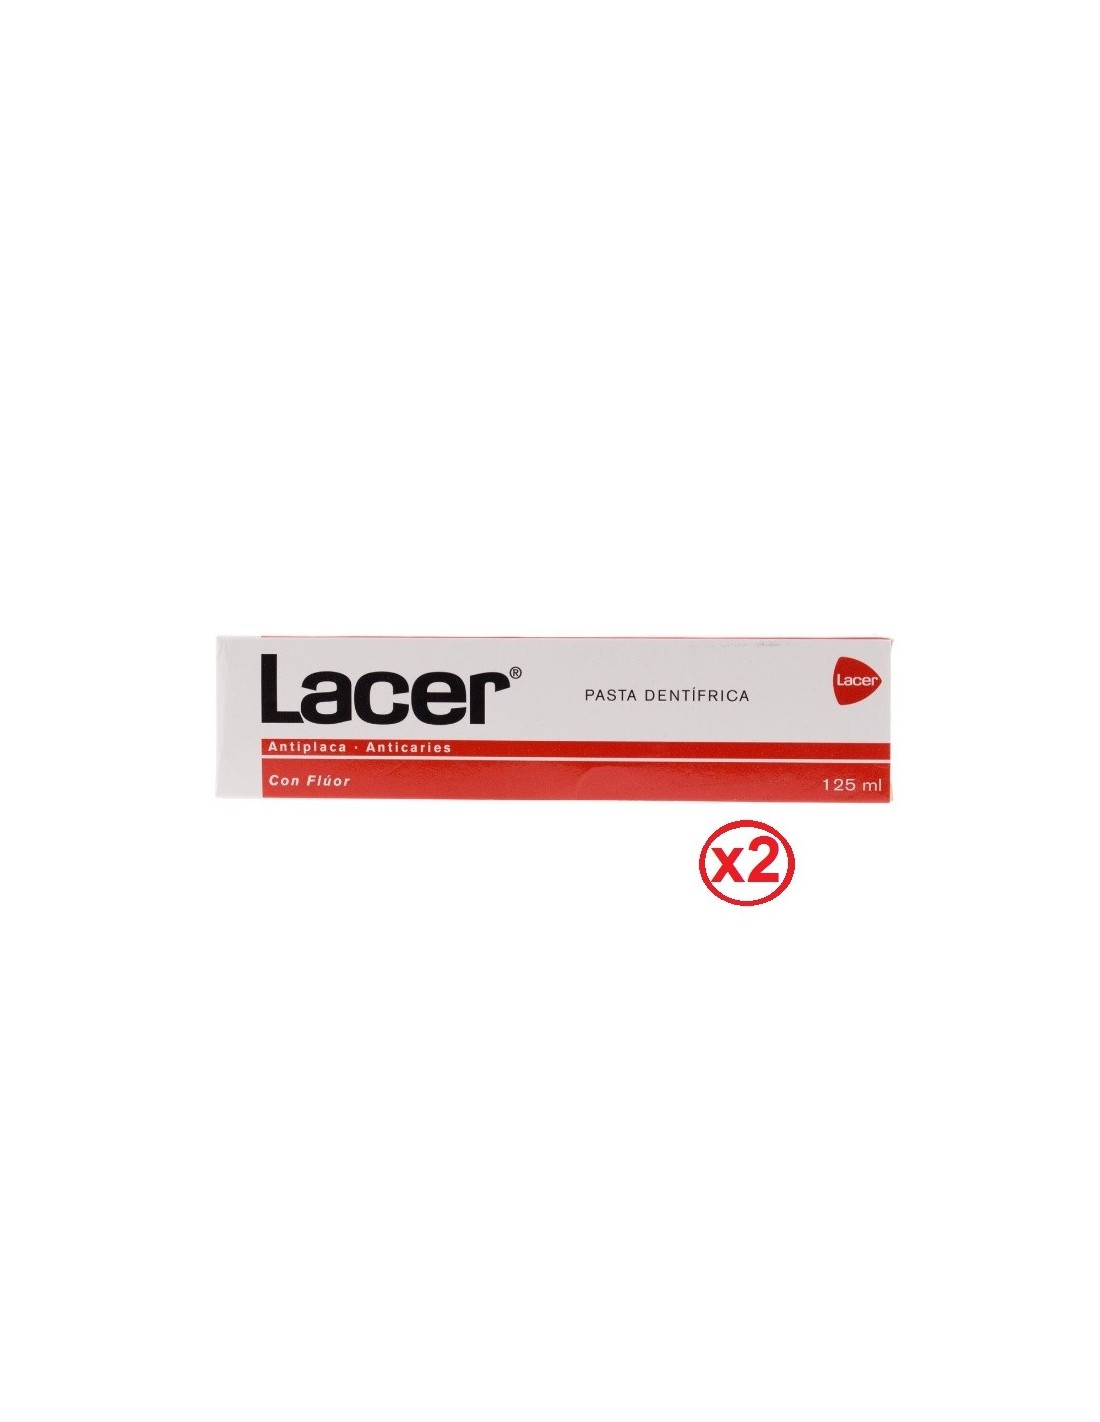  Lacer Pack 2 Pastas fluor duplo 